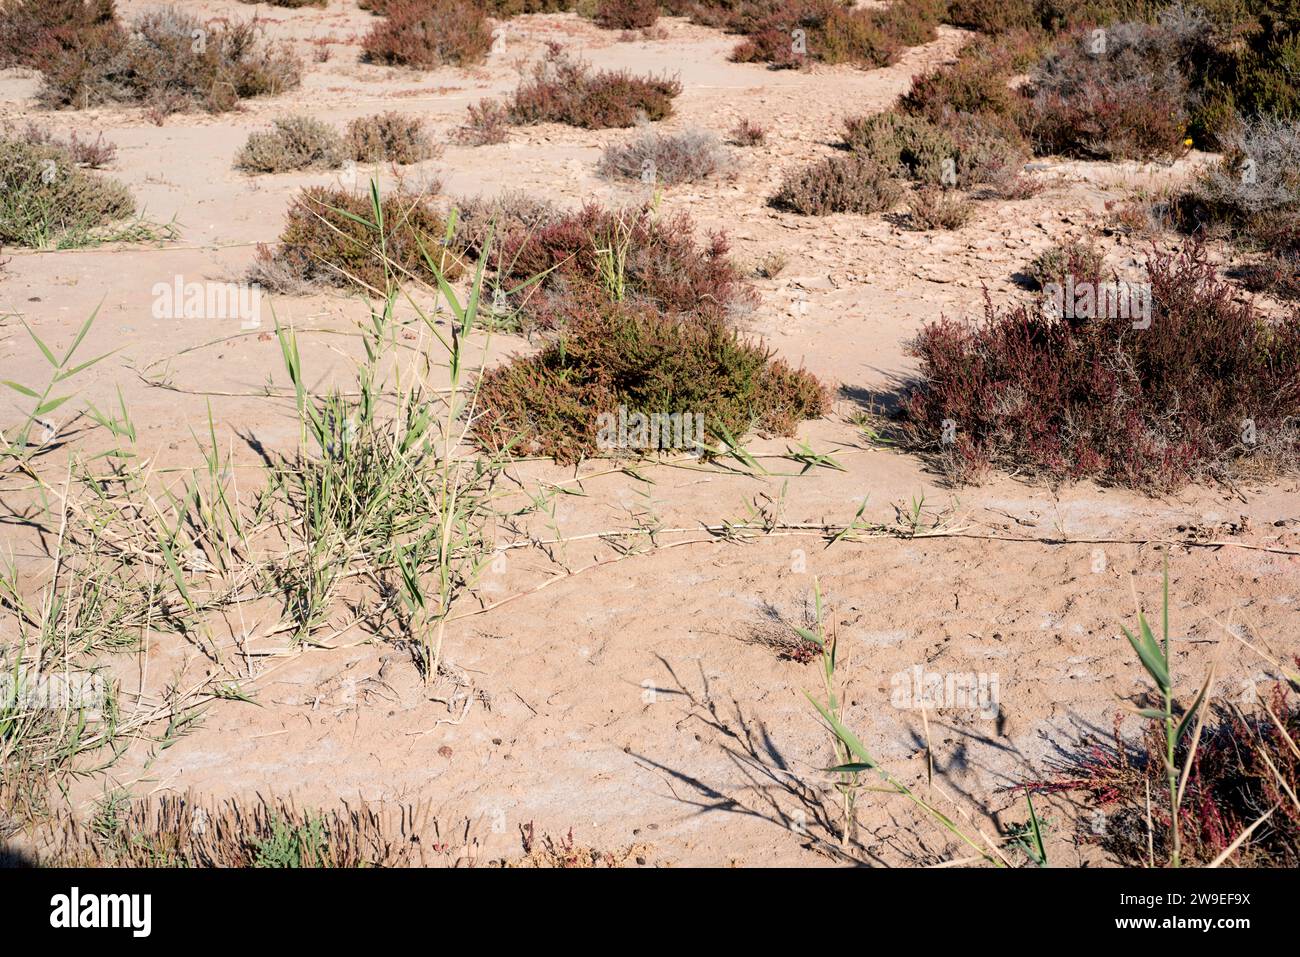 Giant cane, giant reed or wild cane (Arundo donax) is a perennial grass native to Mediterranean Basin. Rhizome detail. This photo was taken in Cabo de Stock Photo